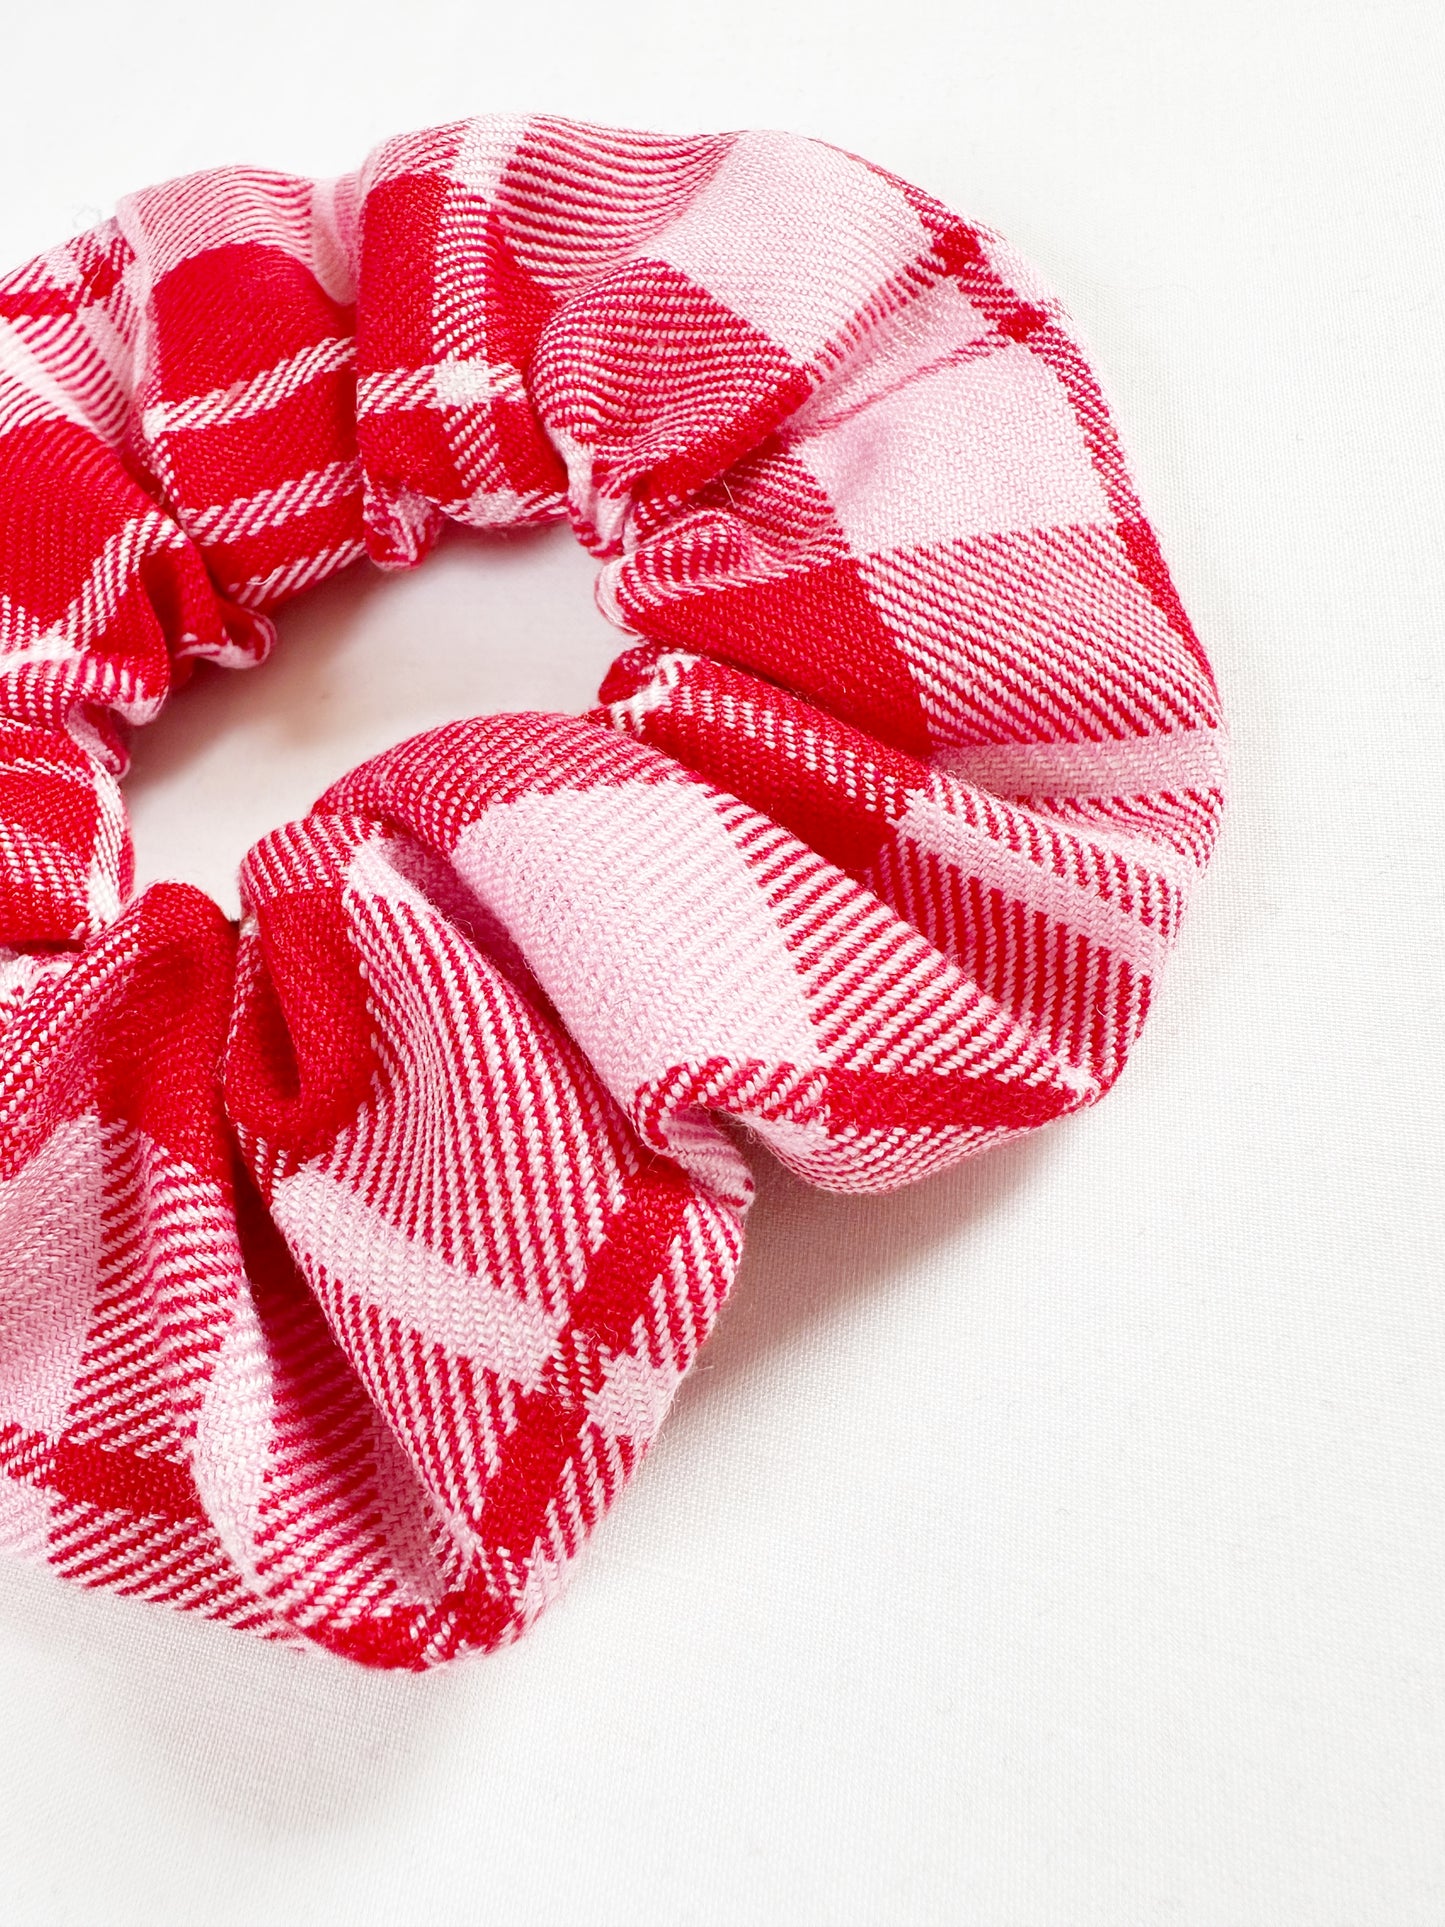 OG scrunchie in red and pink tartan